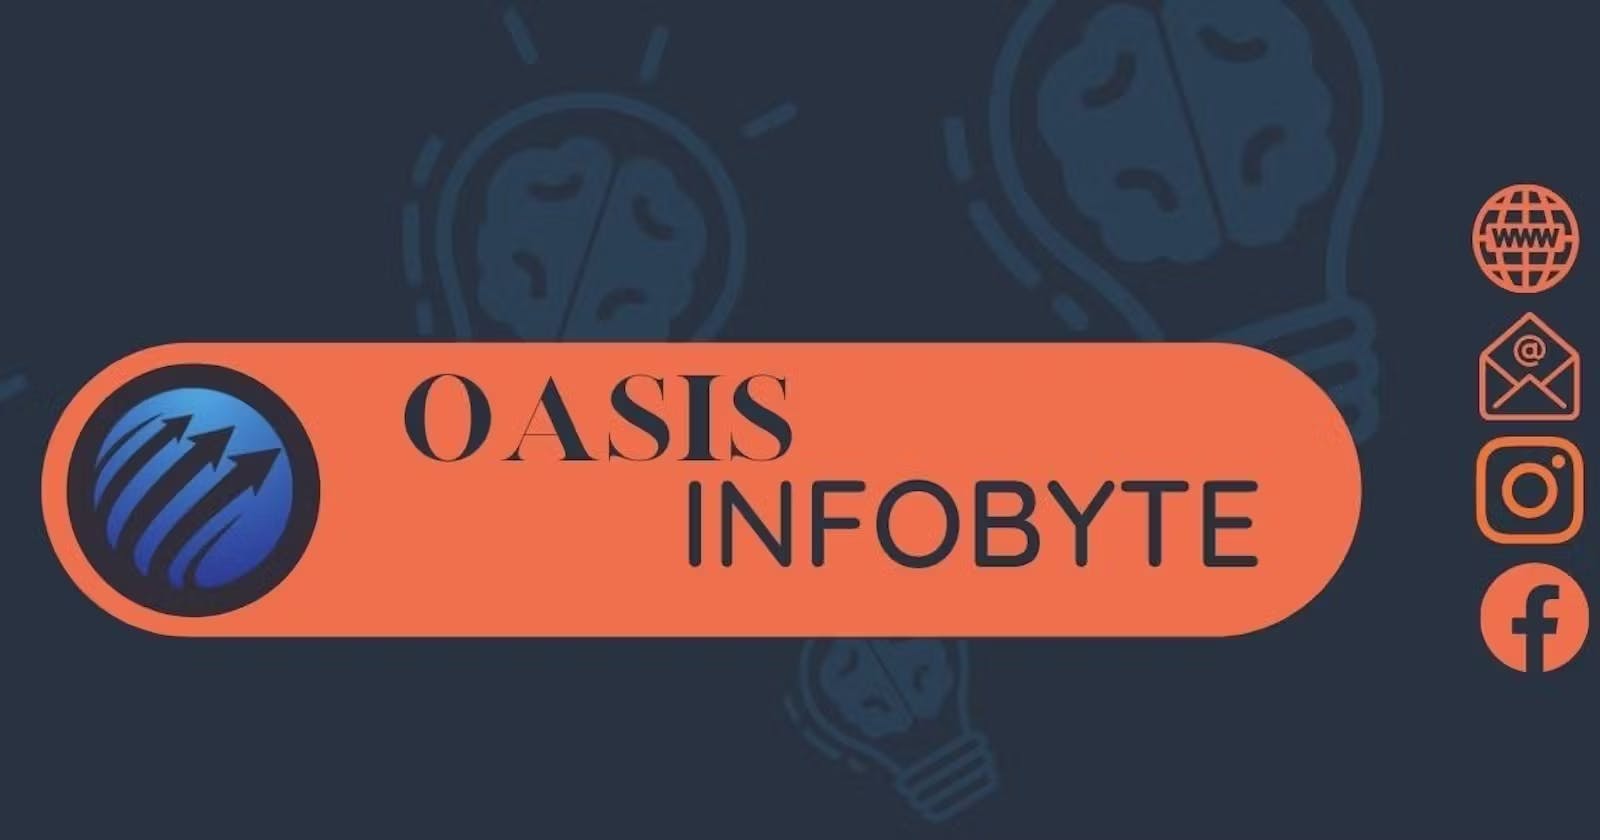 My Web Development and Designing Internship Journey at Oasis Infobyte